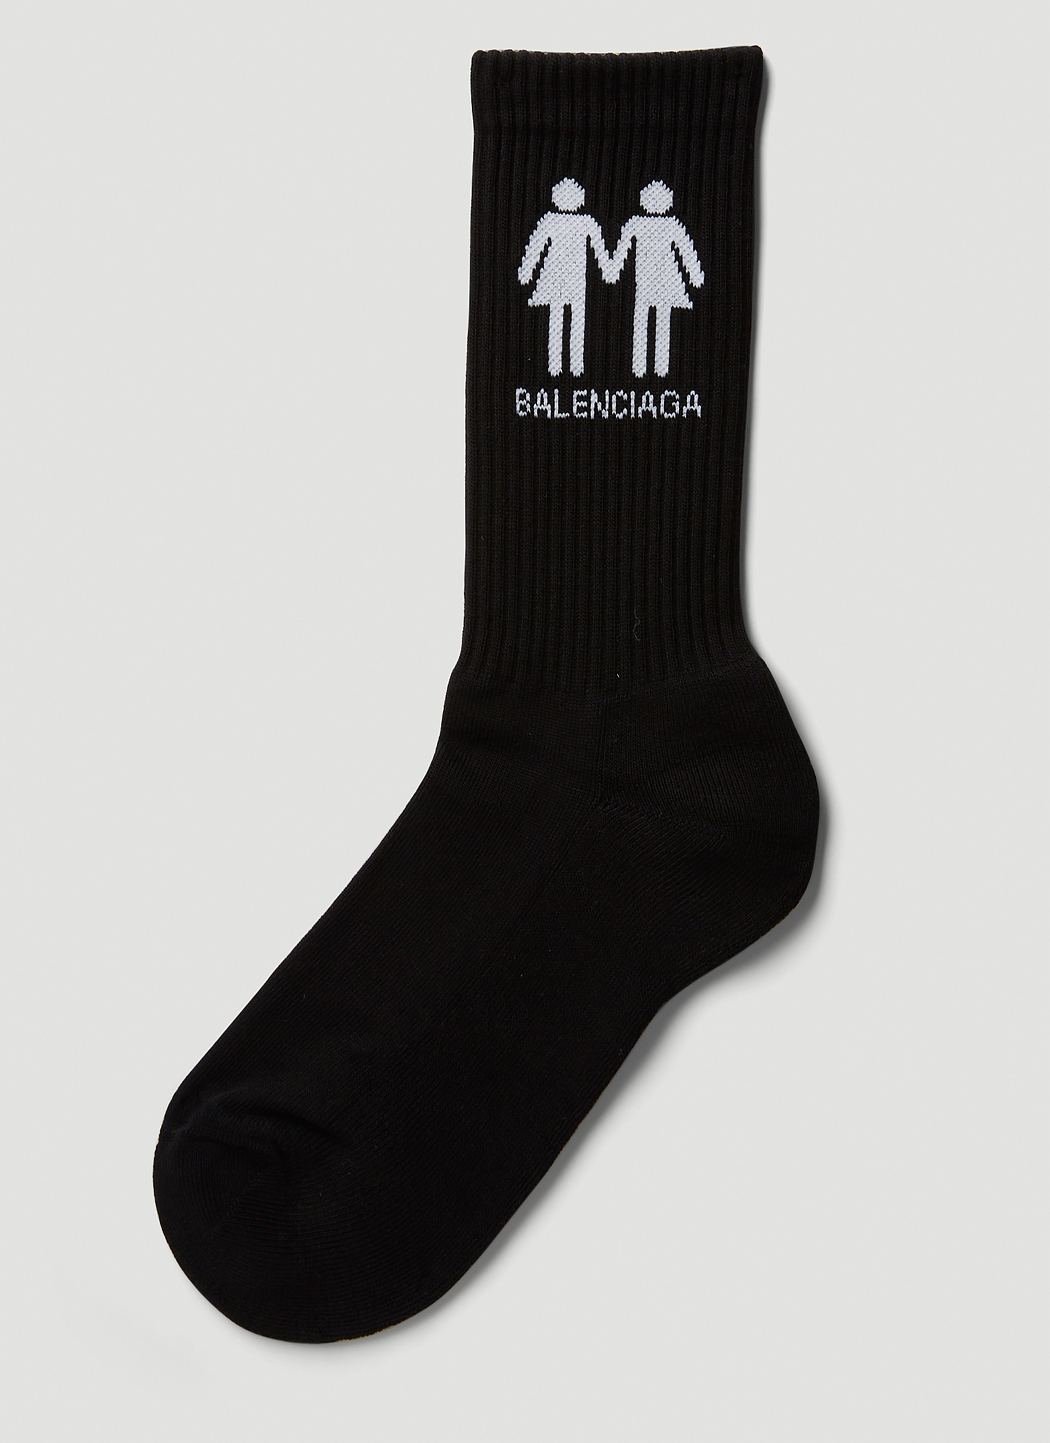 Balenciaga sock boots in sale   TikTok